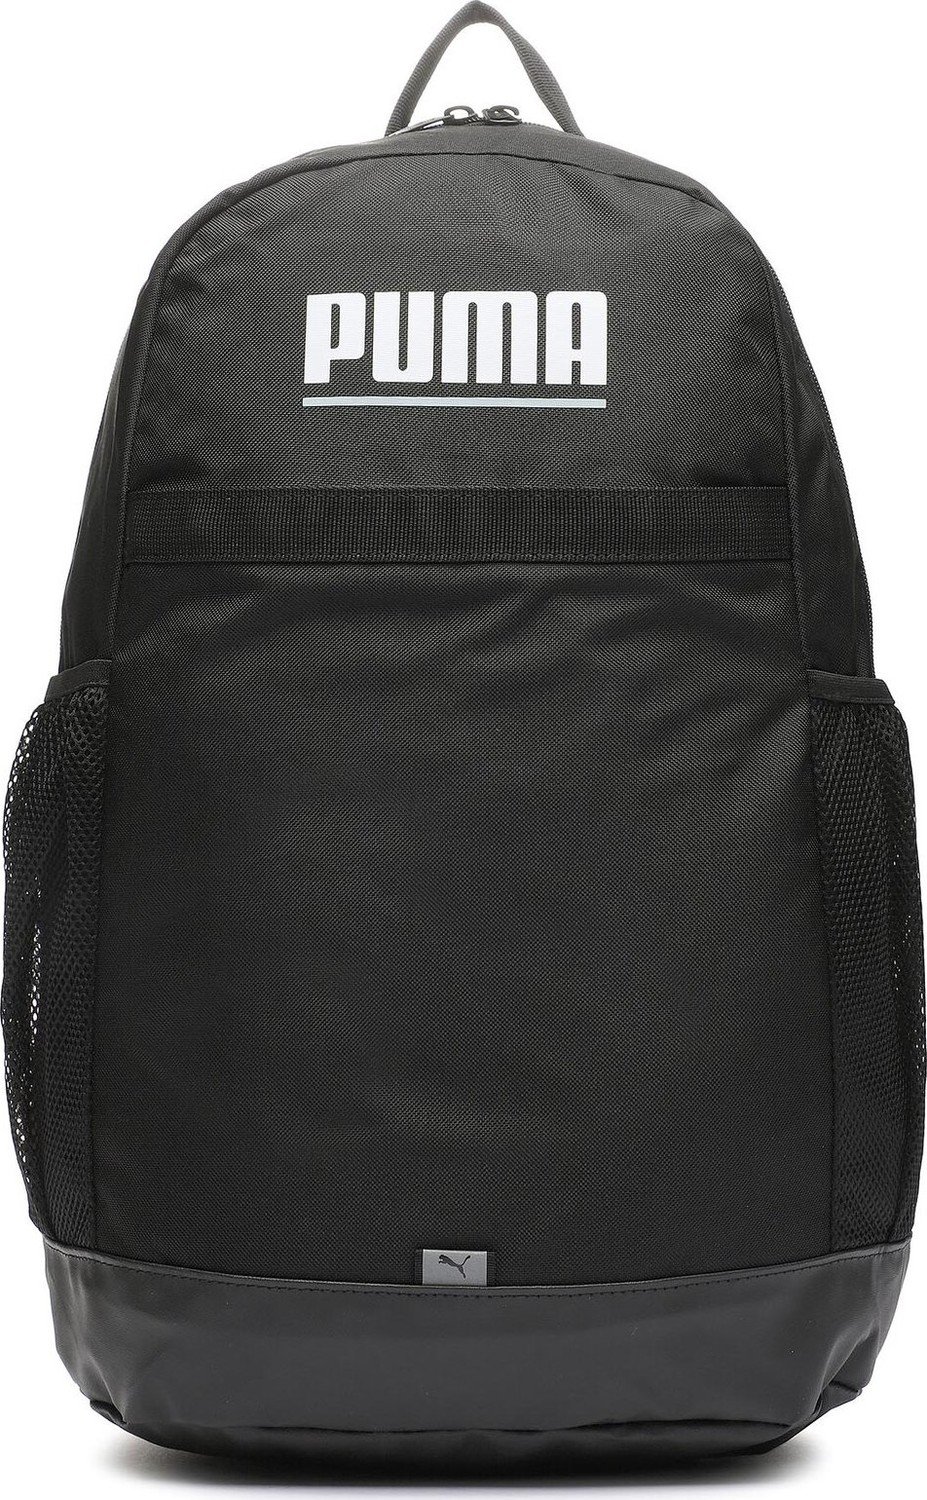 Batoh Puma Plus Backpack 079615 01 Puma Black